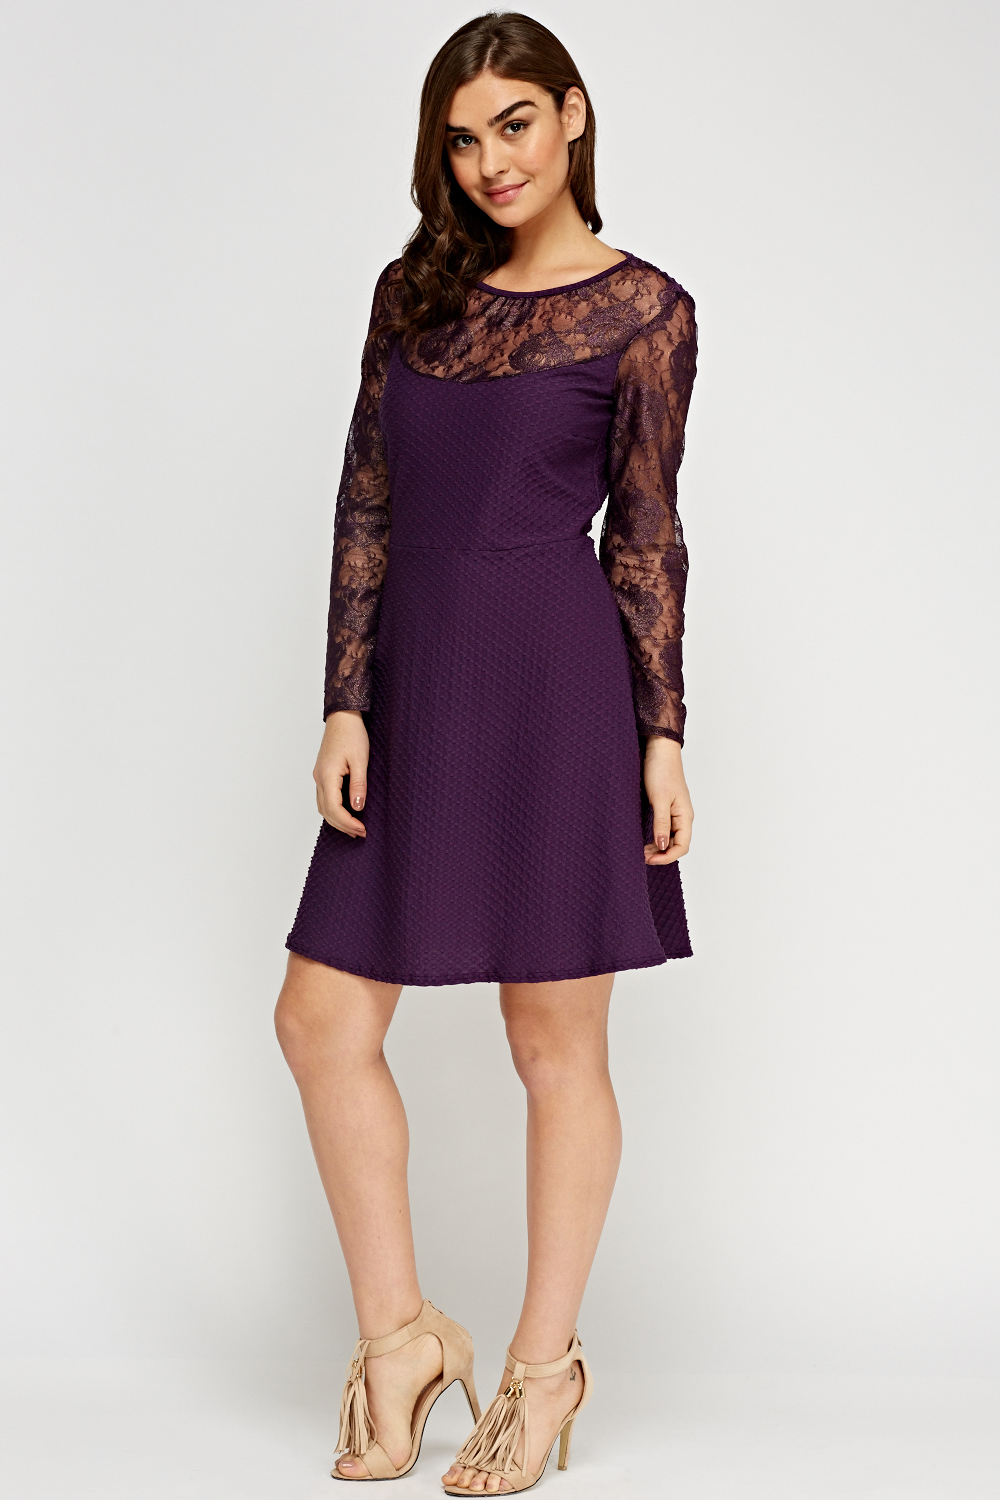 Lace Insert Purple Dress - Just $6